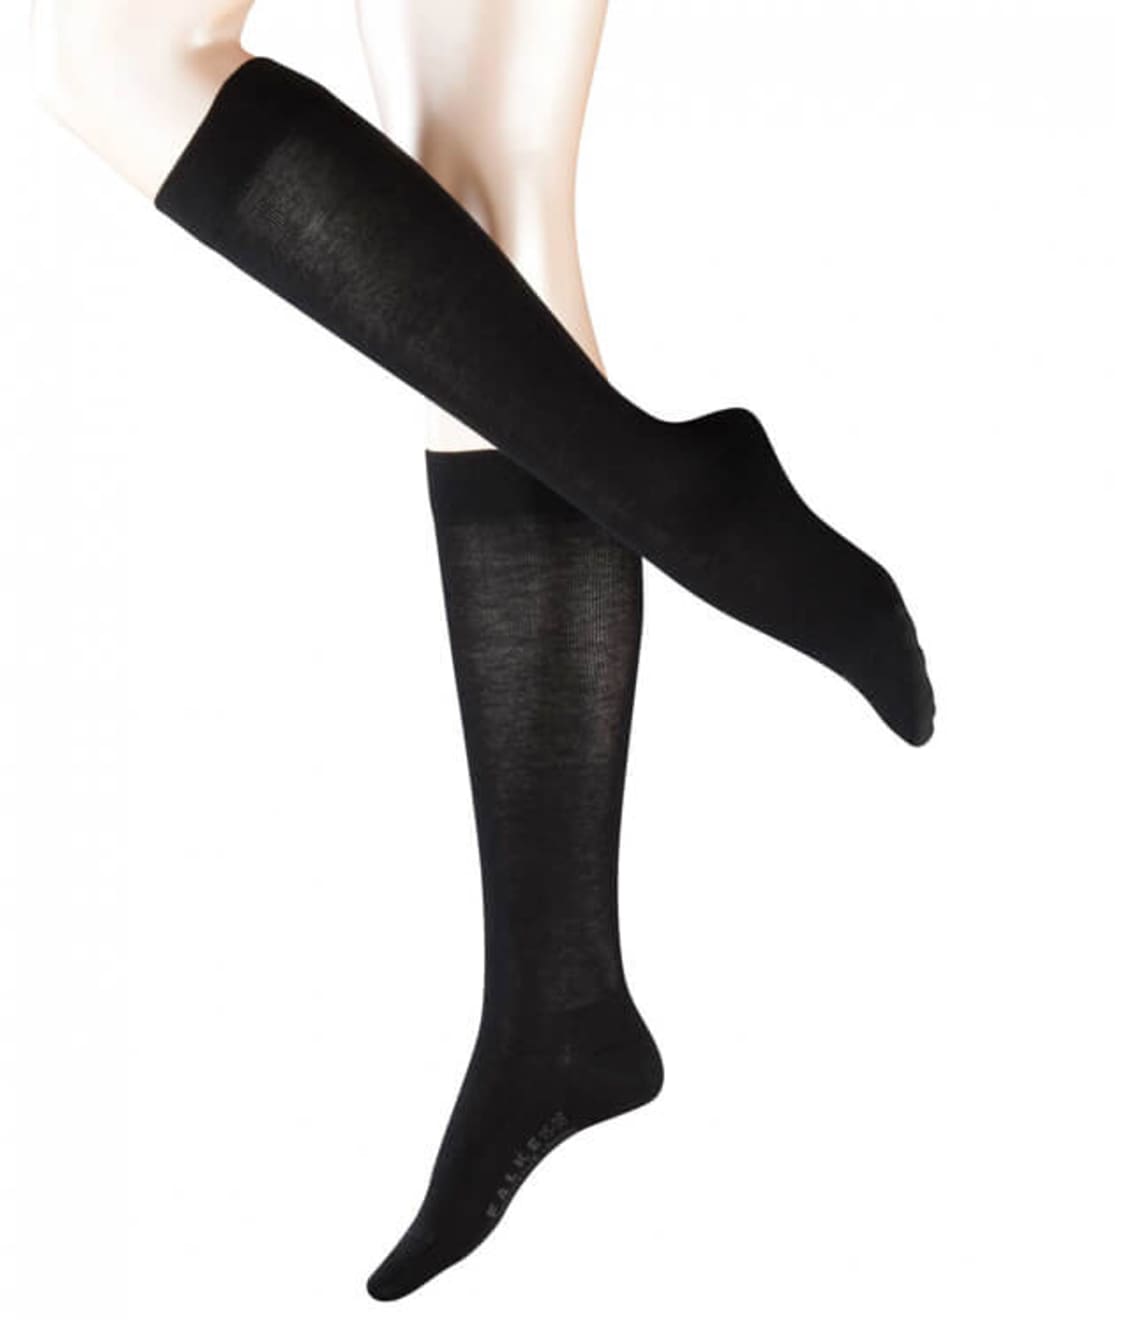 Falke Sensitive London Cotton Knee Socks & Reviews | Bare Necessities ...